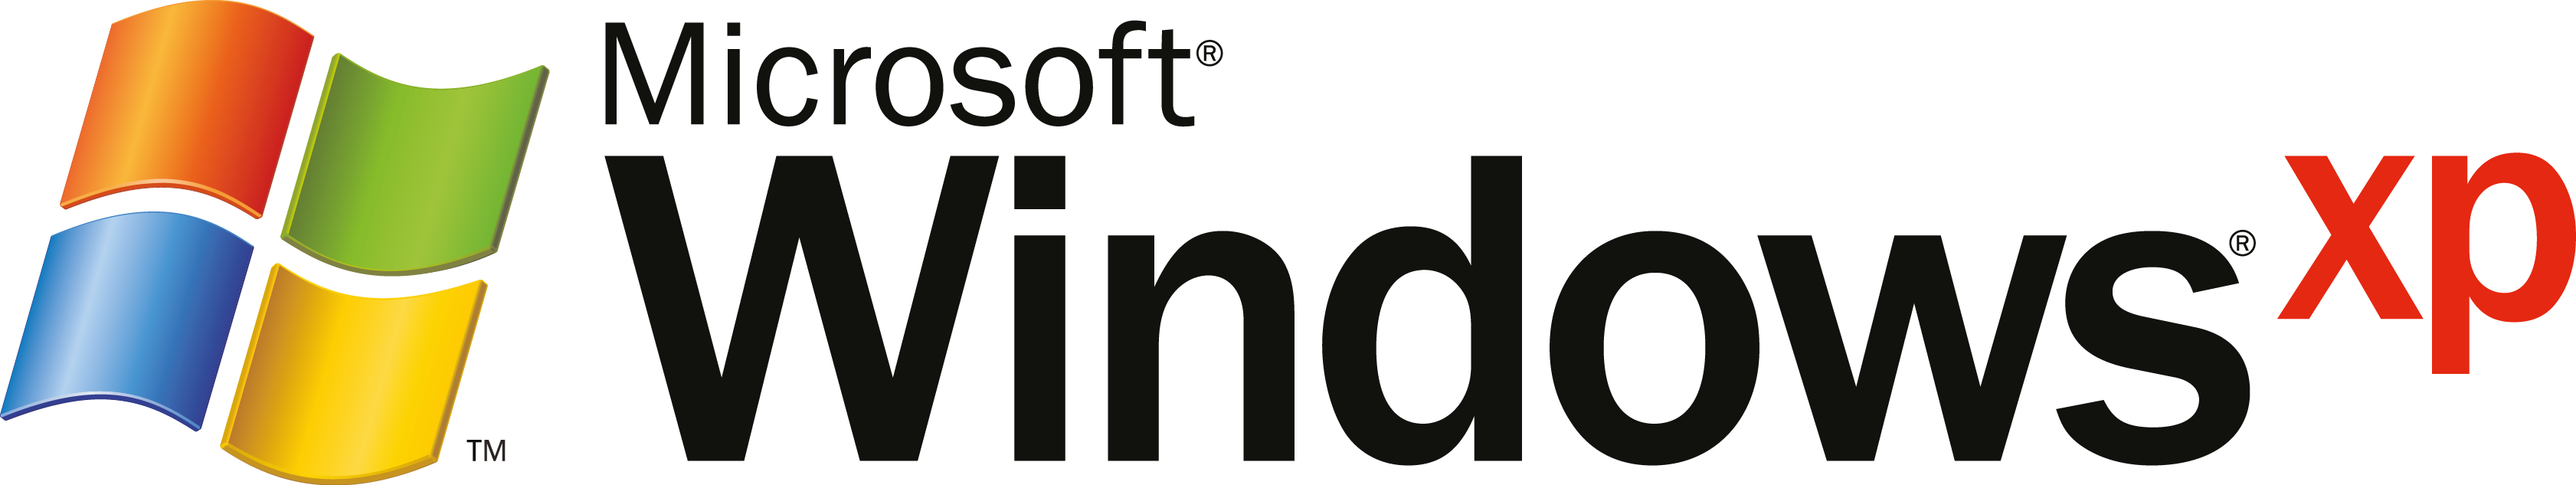 Microsoft Windows Png - Windows Xp Logo Png, Transparent background PNG HD thumbnail